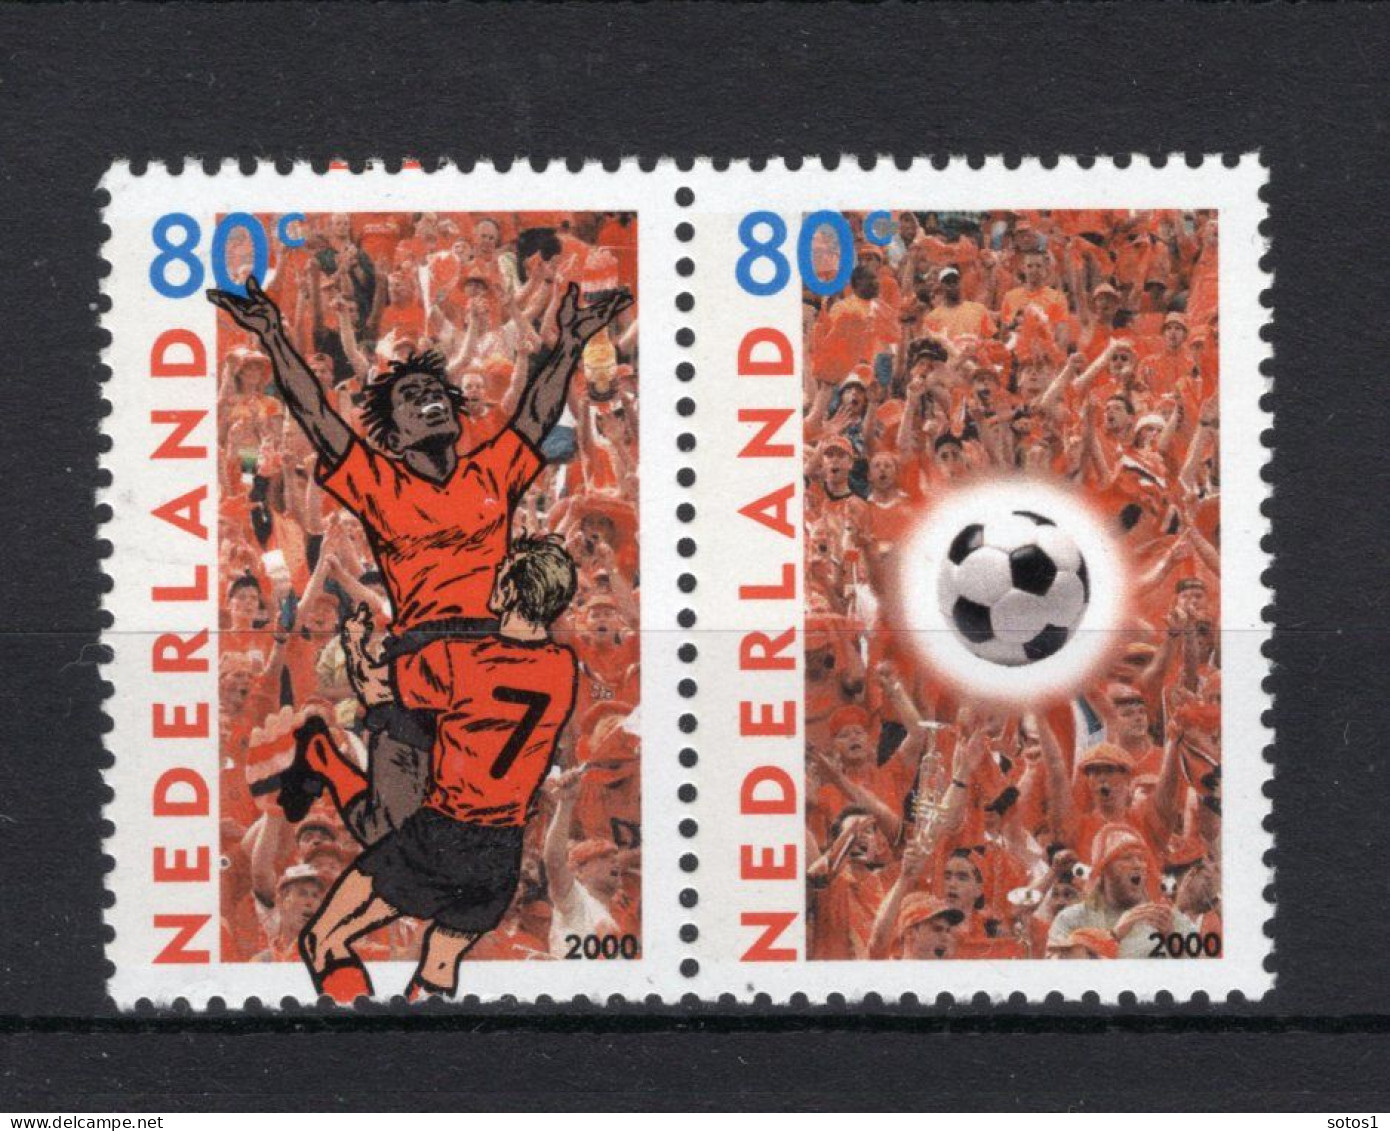 NEDERLAND 1888/1889 MNH 2000 - EK Voetbal -1 - Unused Stamps